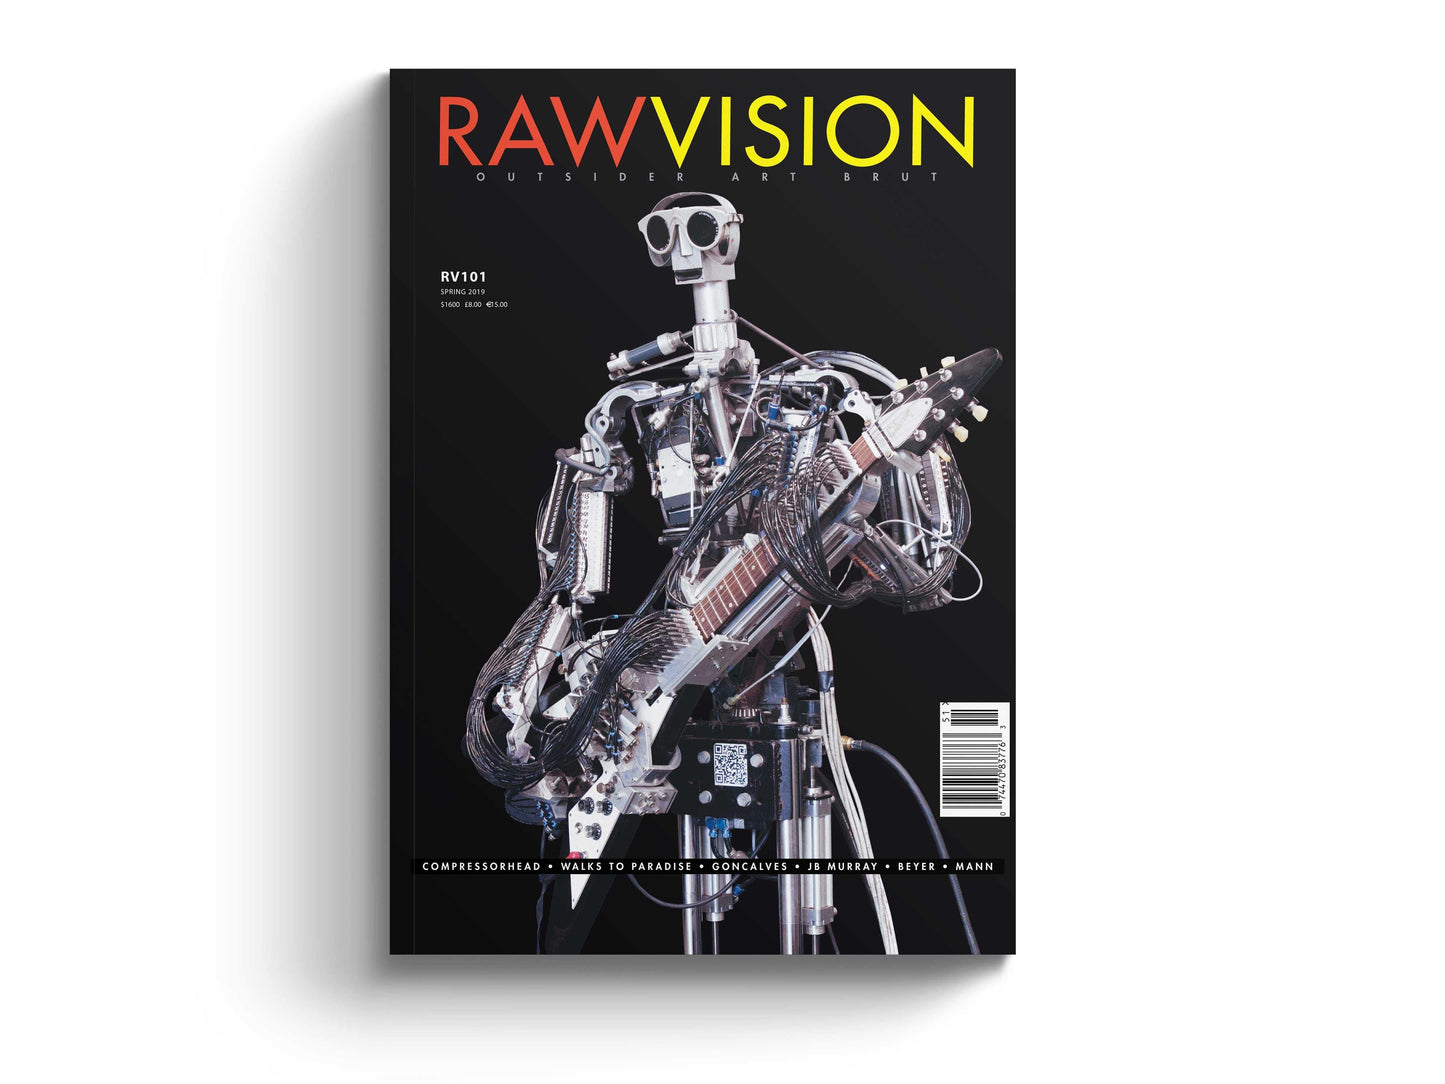 Raw Vision Magazine Issue #101